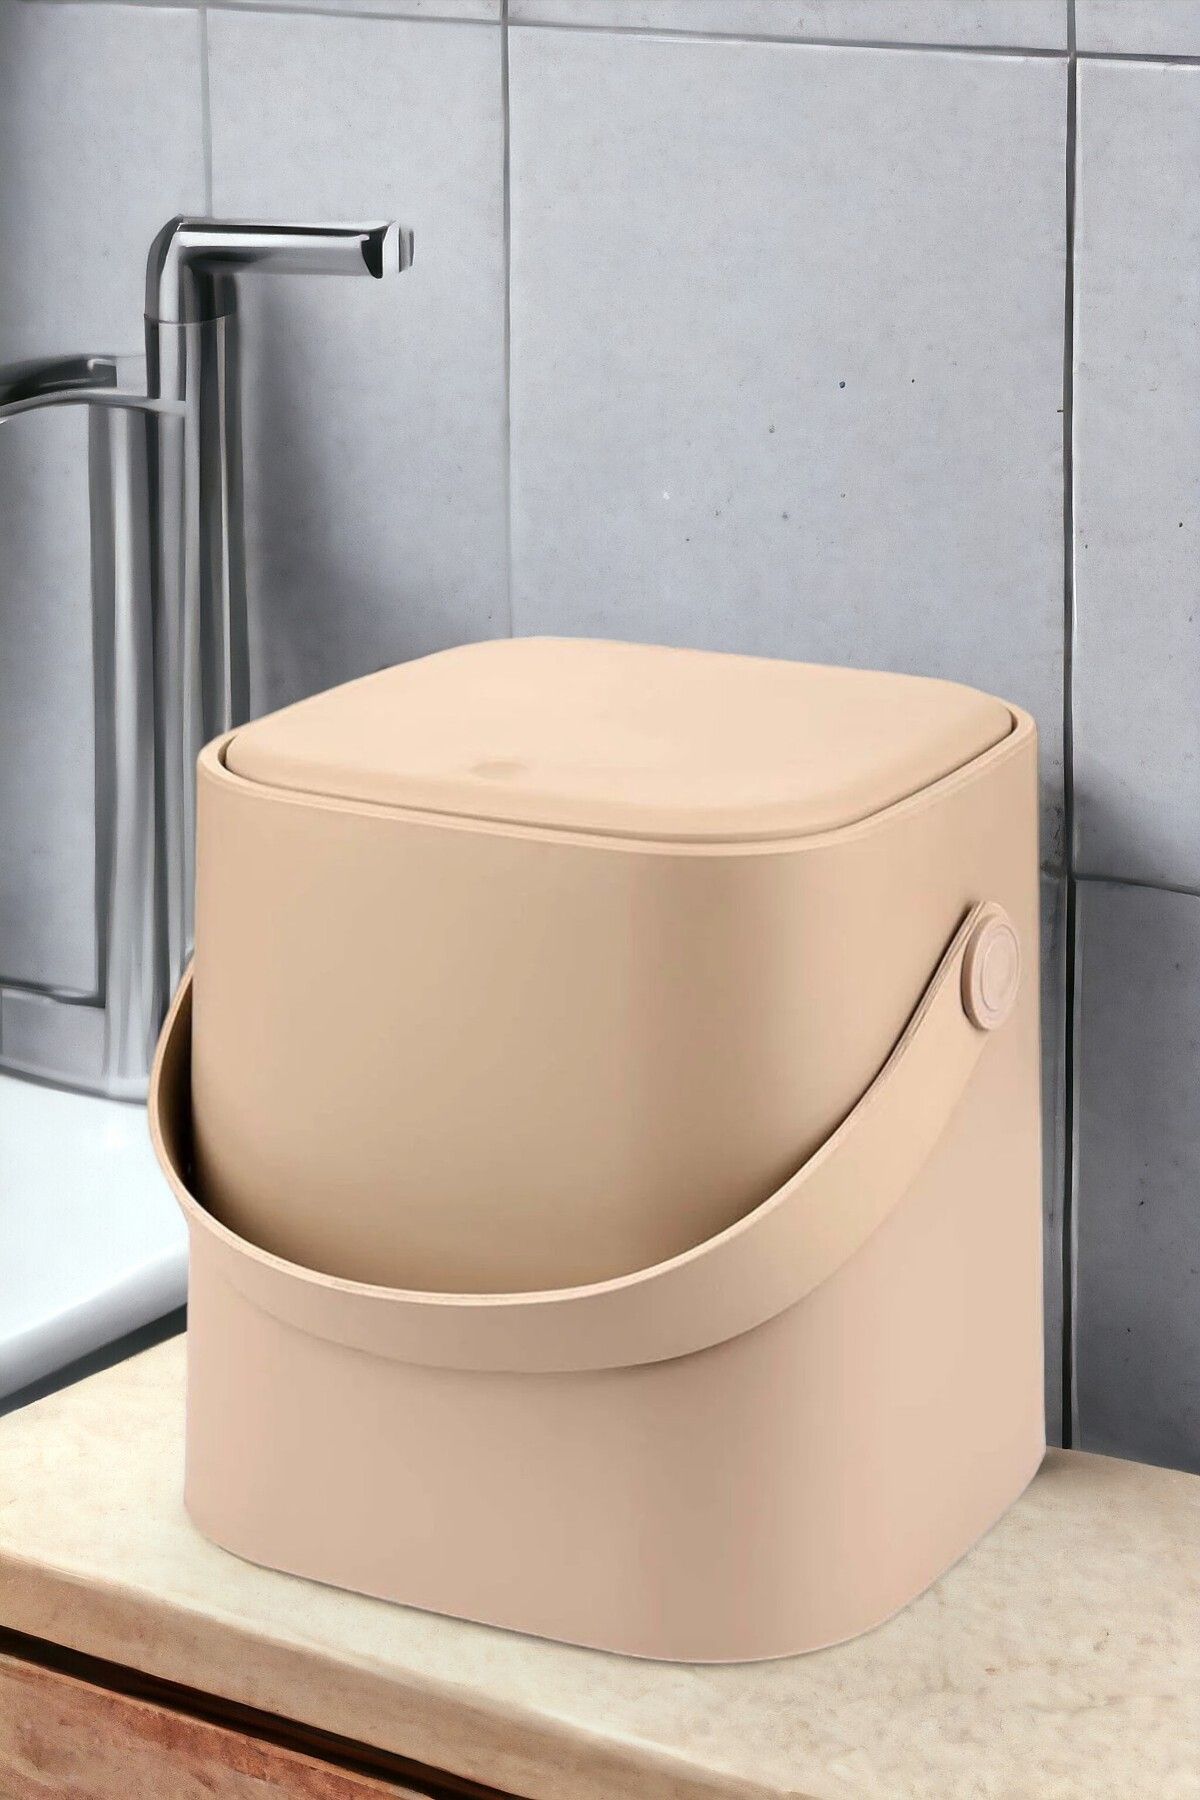 İronika Deri Saplı İç Kovalı Click Kapaklı Mutfak Banyo Tuvalet Çöp Kovası 4 LT Çöp Kutusu Kahve